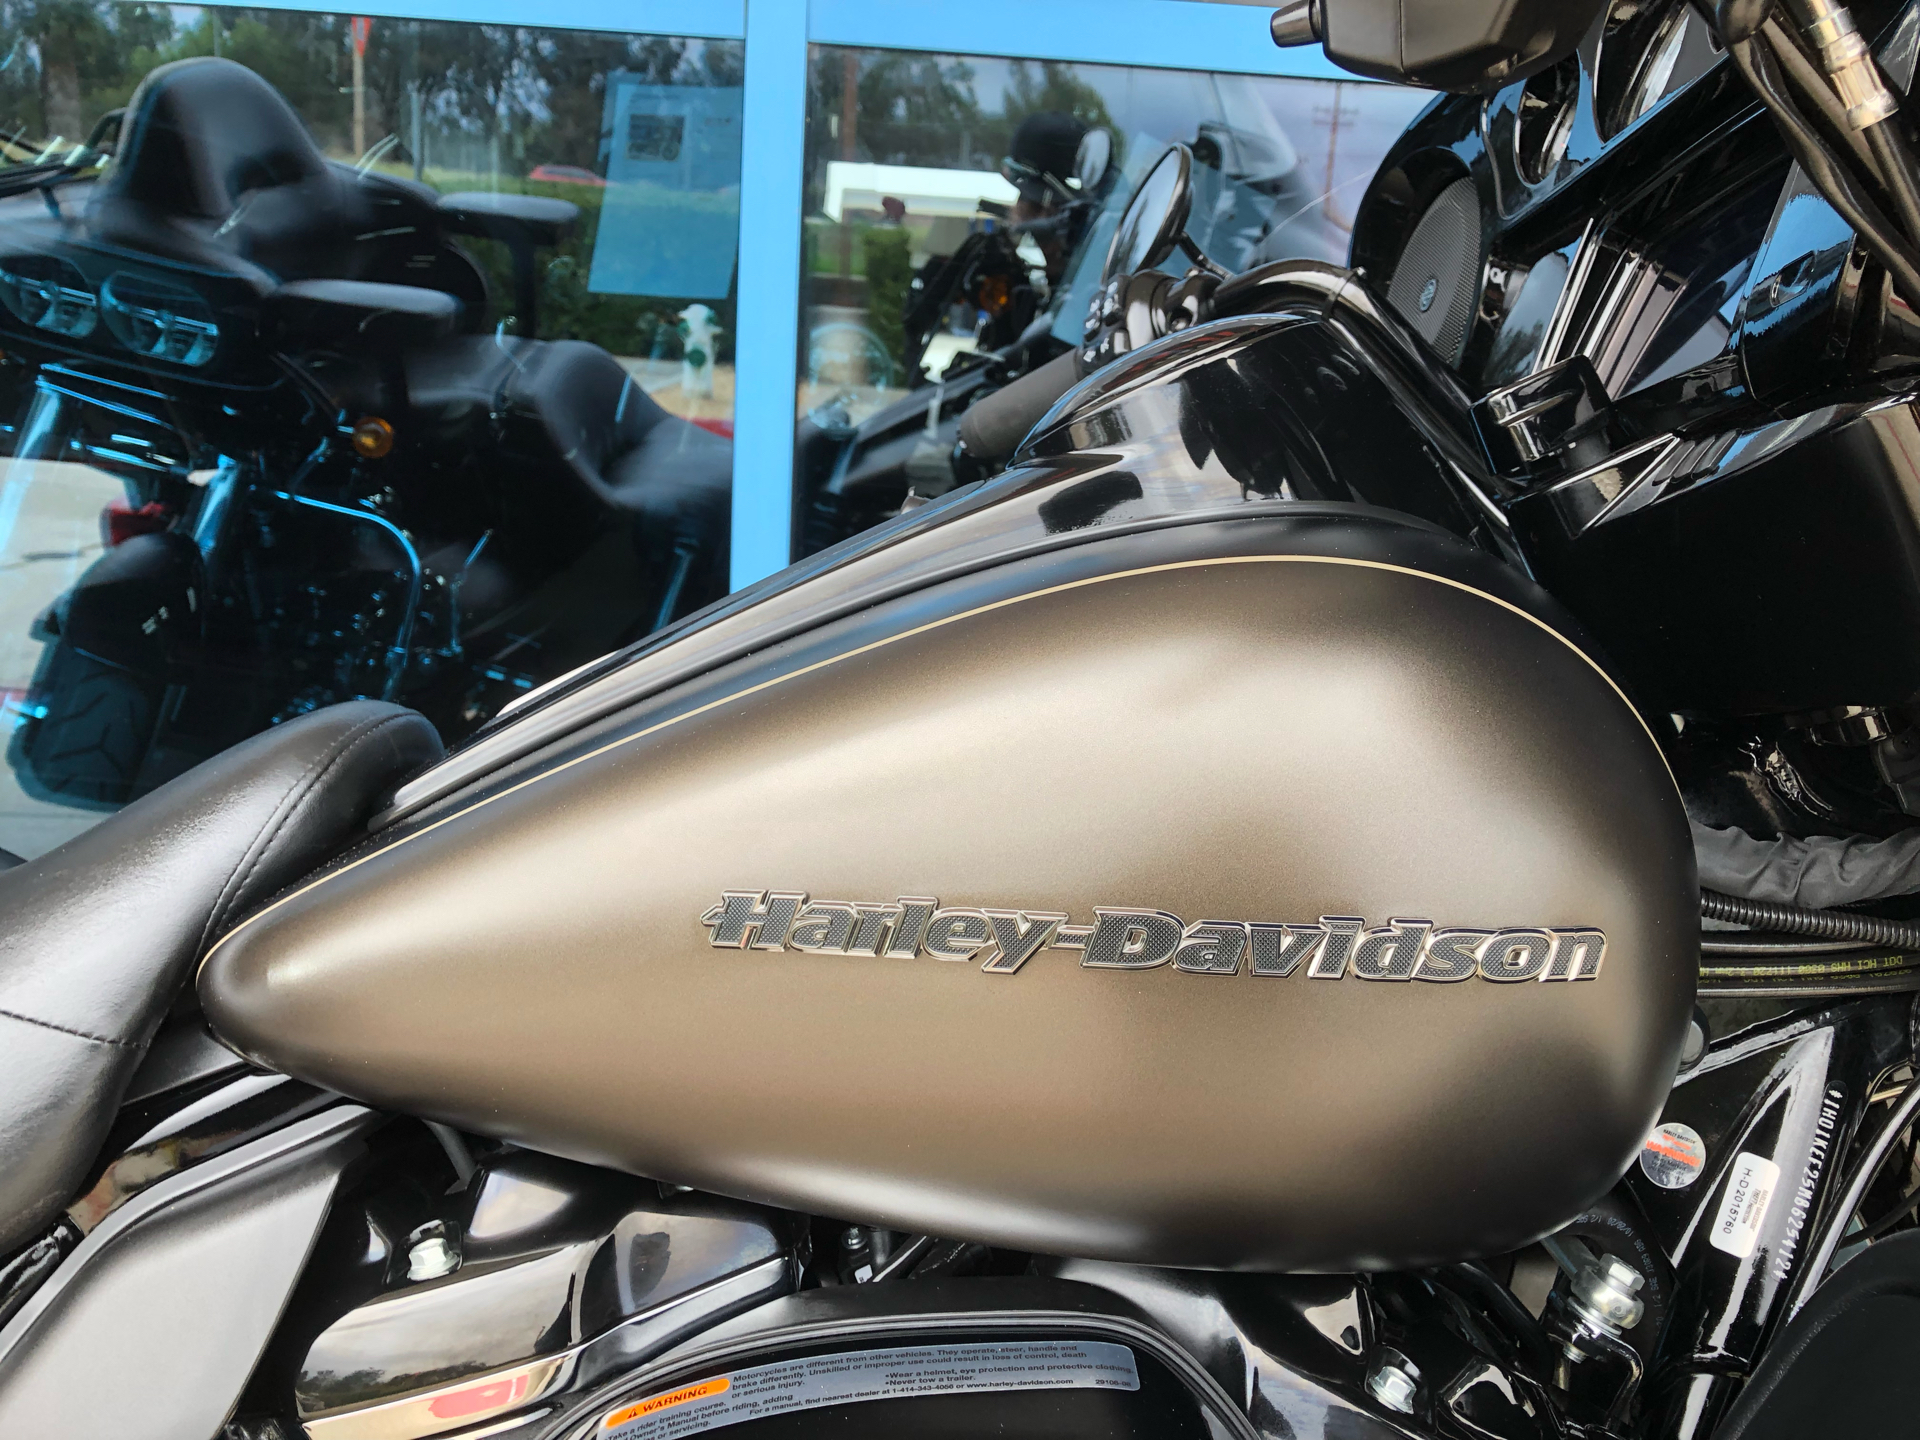 2021 Harley-Davidson Ultra Limited in Temecula, California - Photo 7